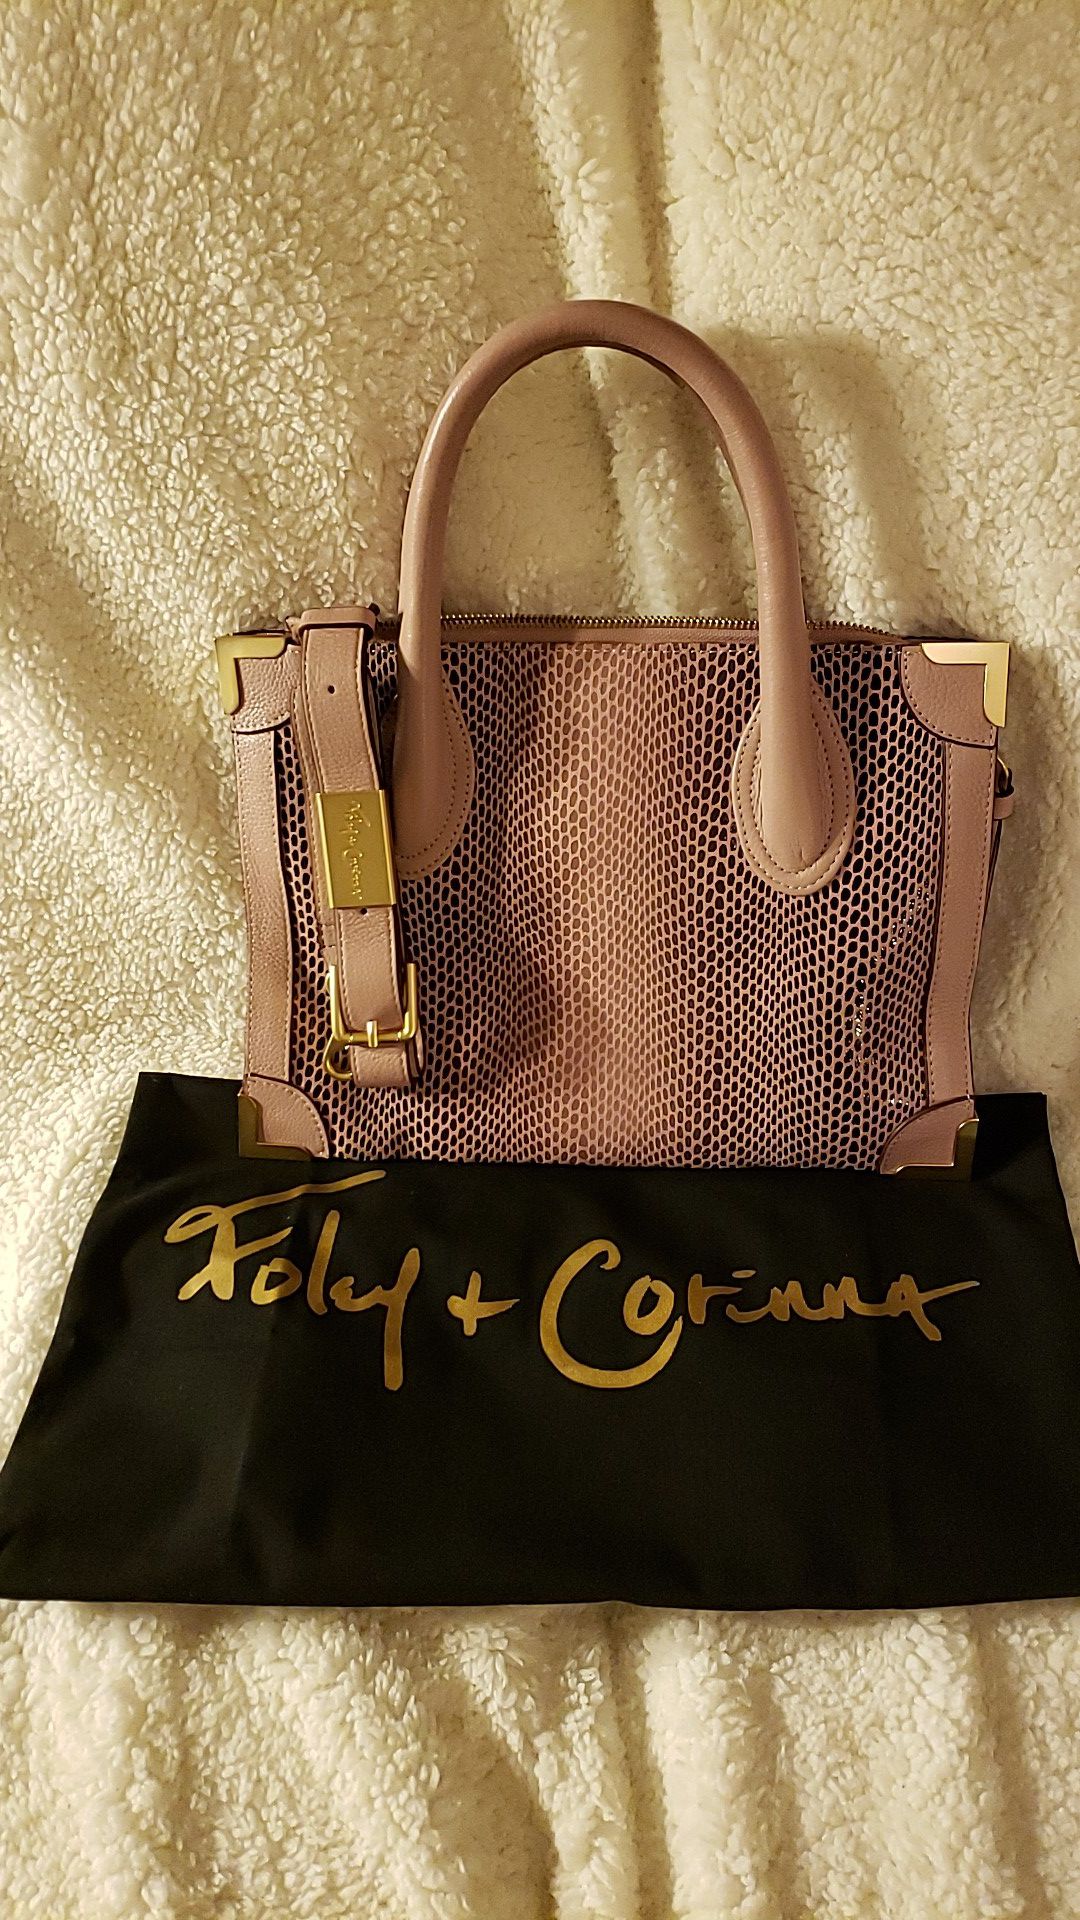 Foley & Corinna handbag